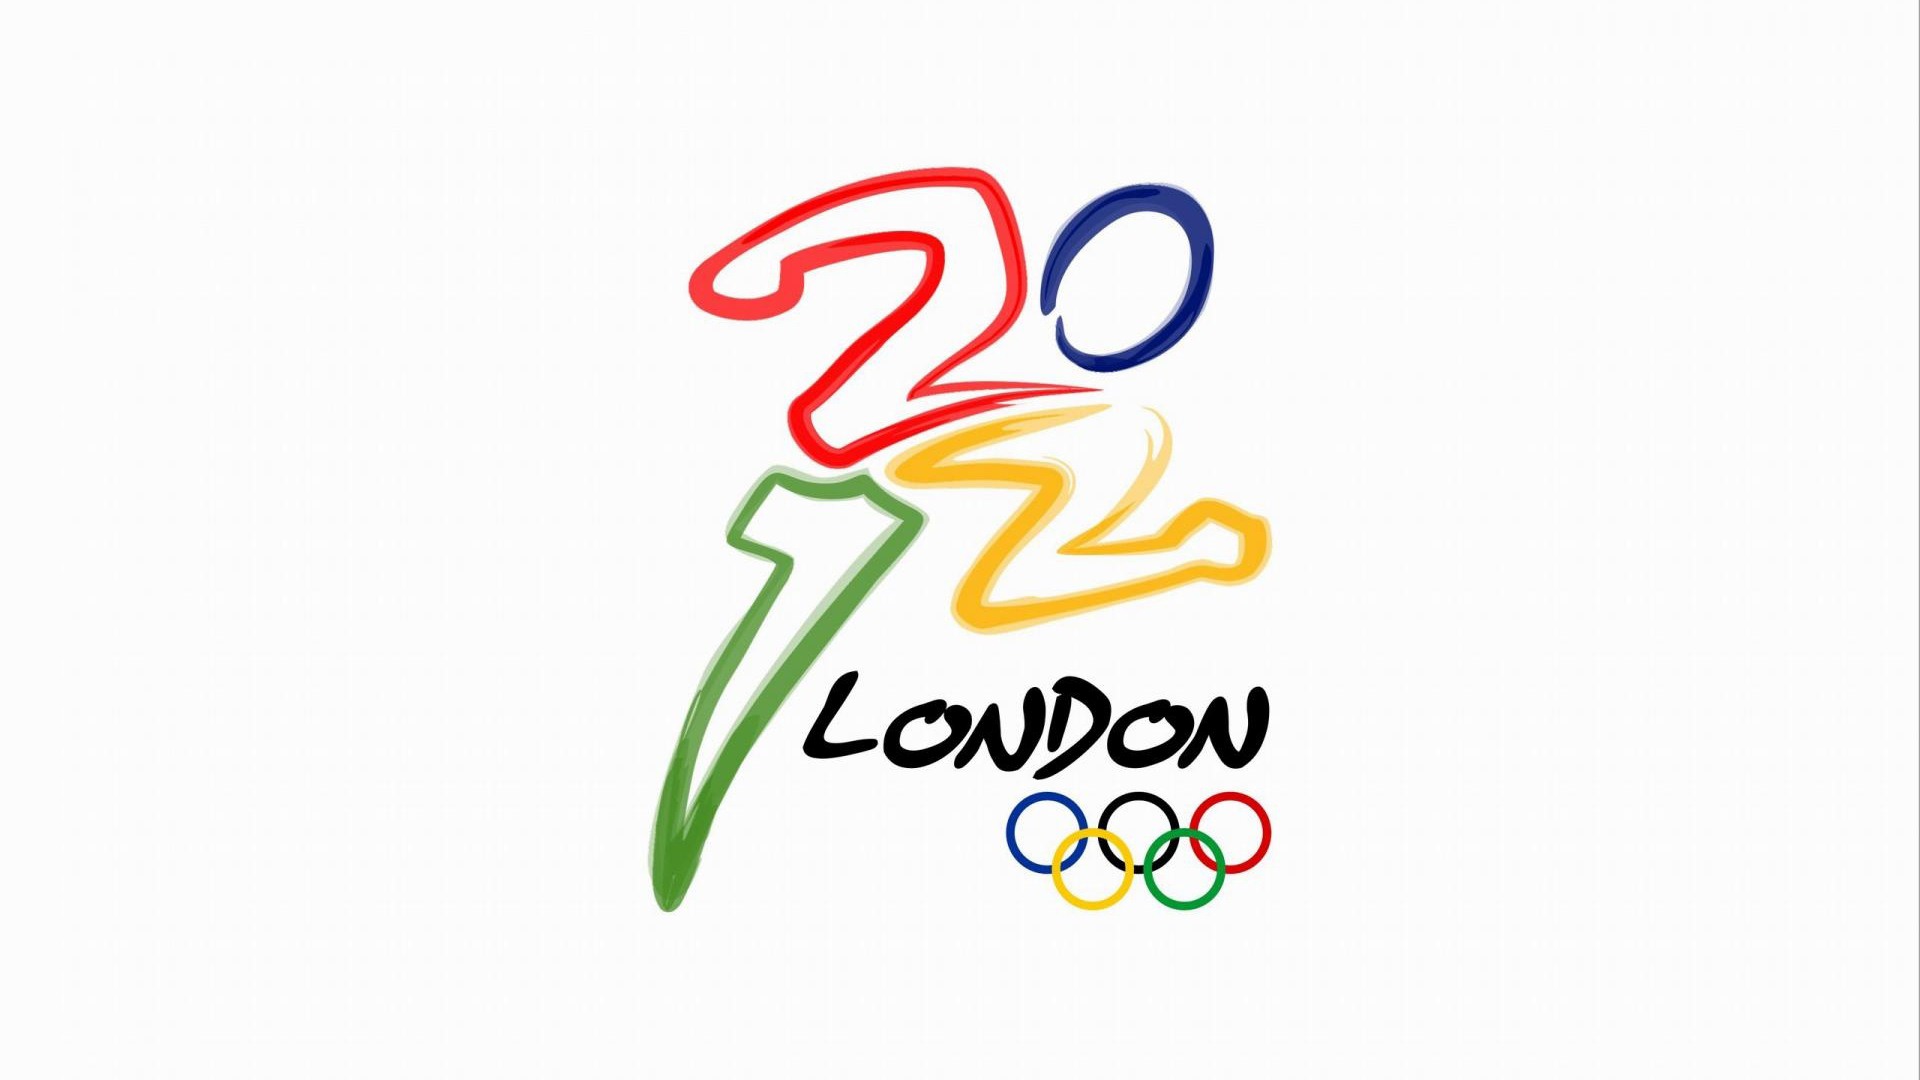 London 2012 Olympics theme wallpapers (2) #22 - 1920x1080